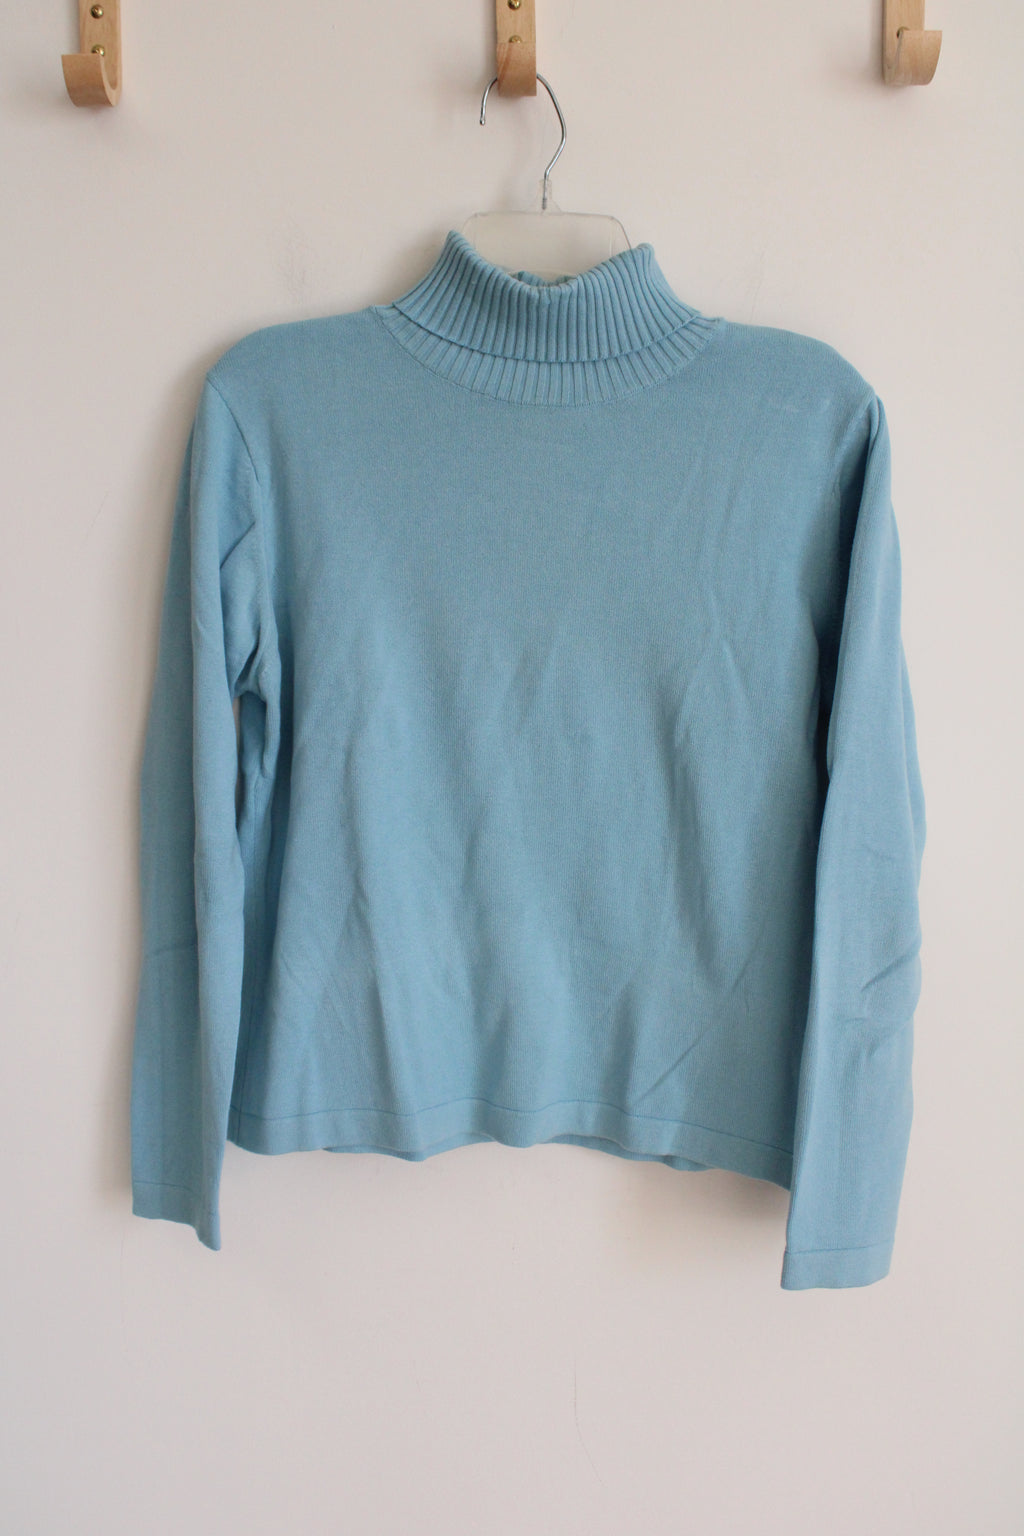 Talbots Blue Knit Turtleneck Sweater | M Petite